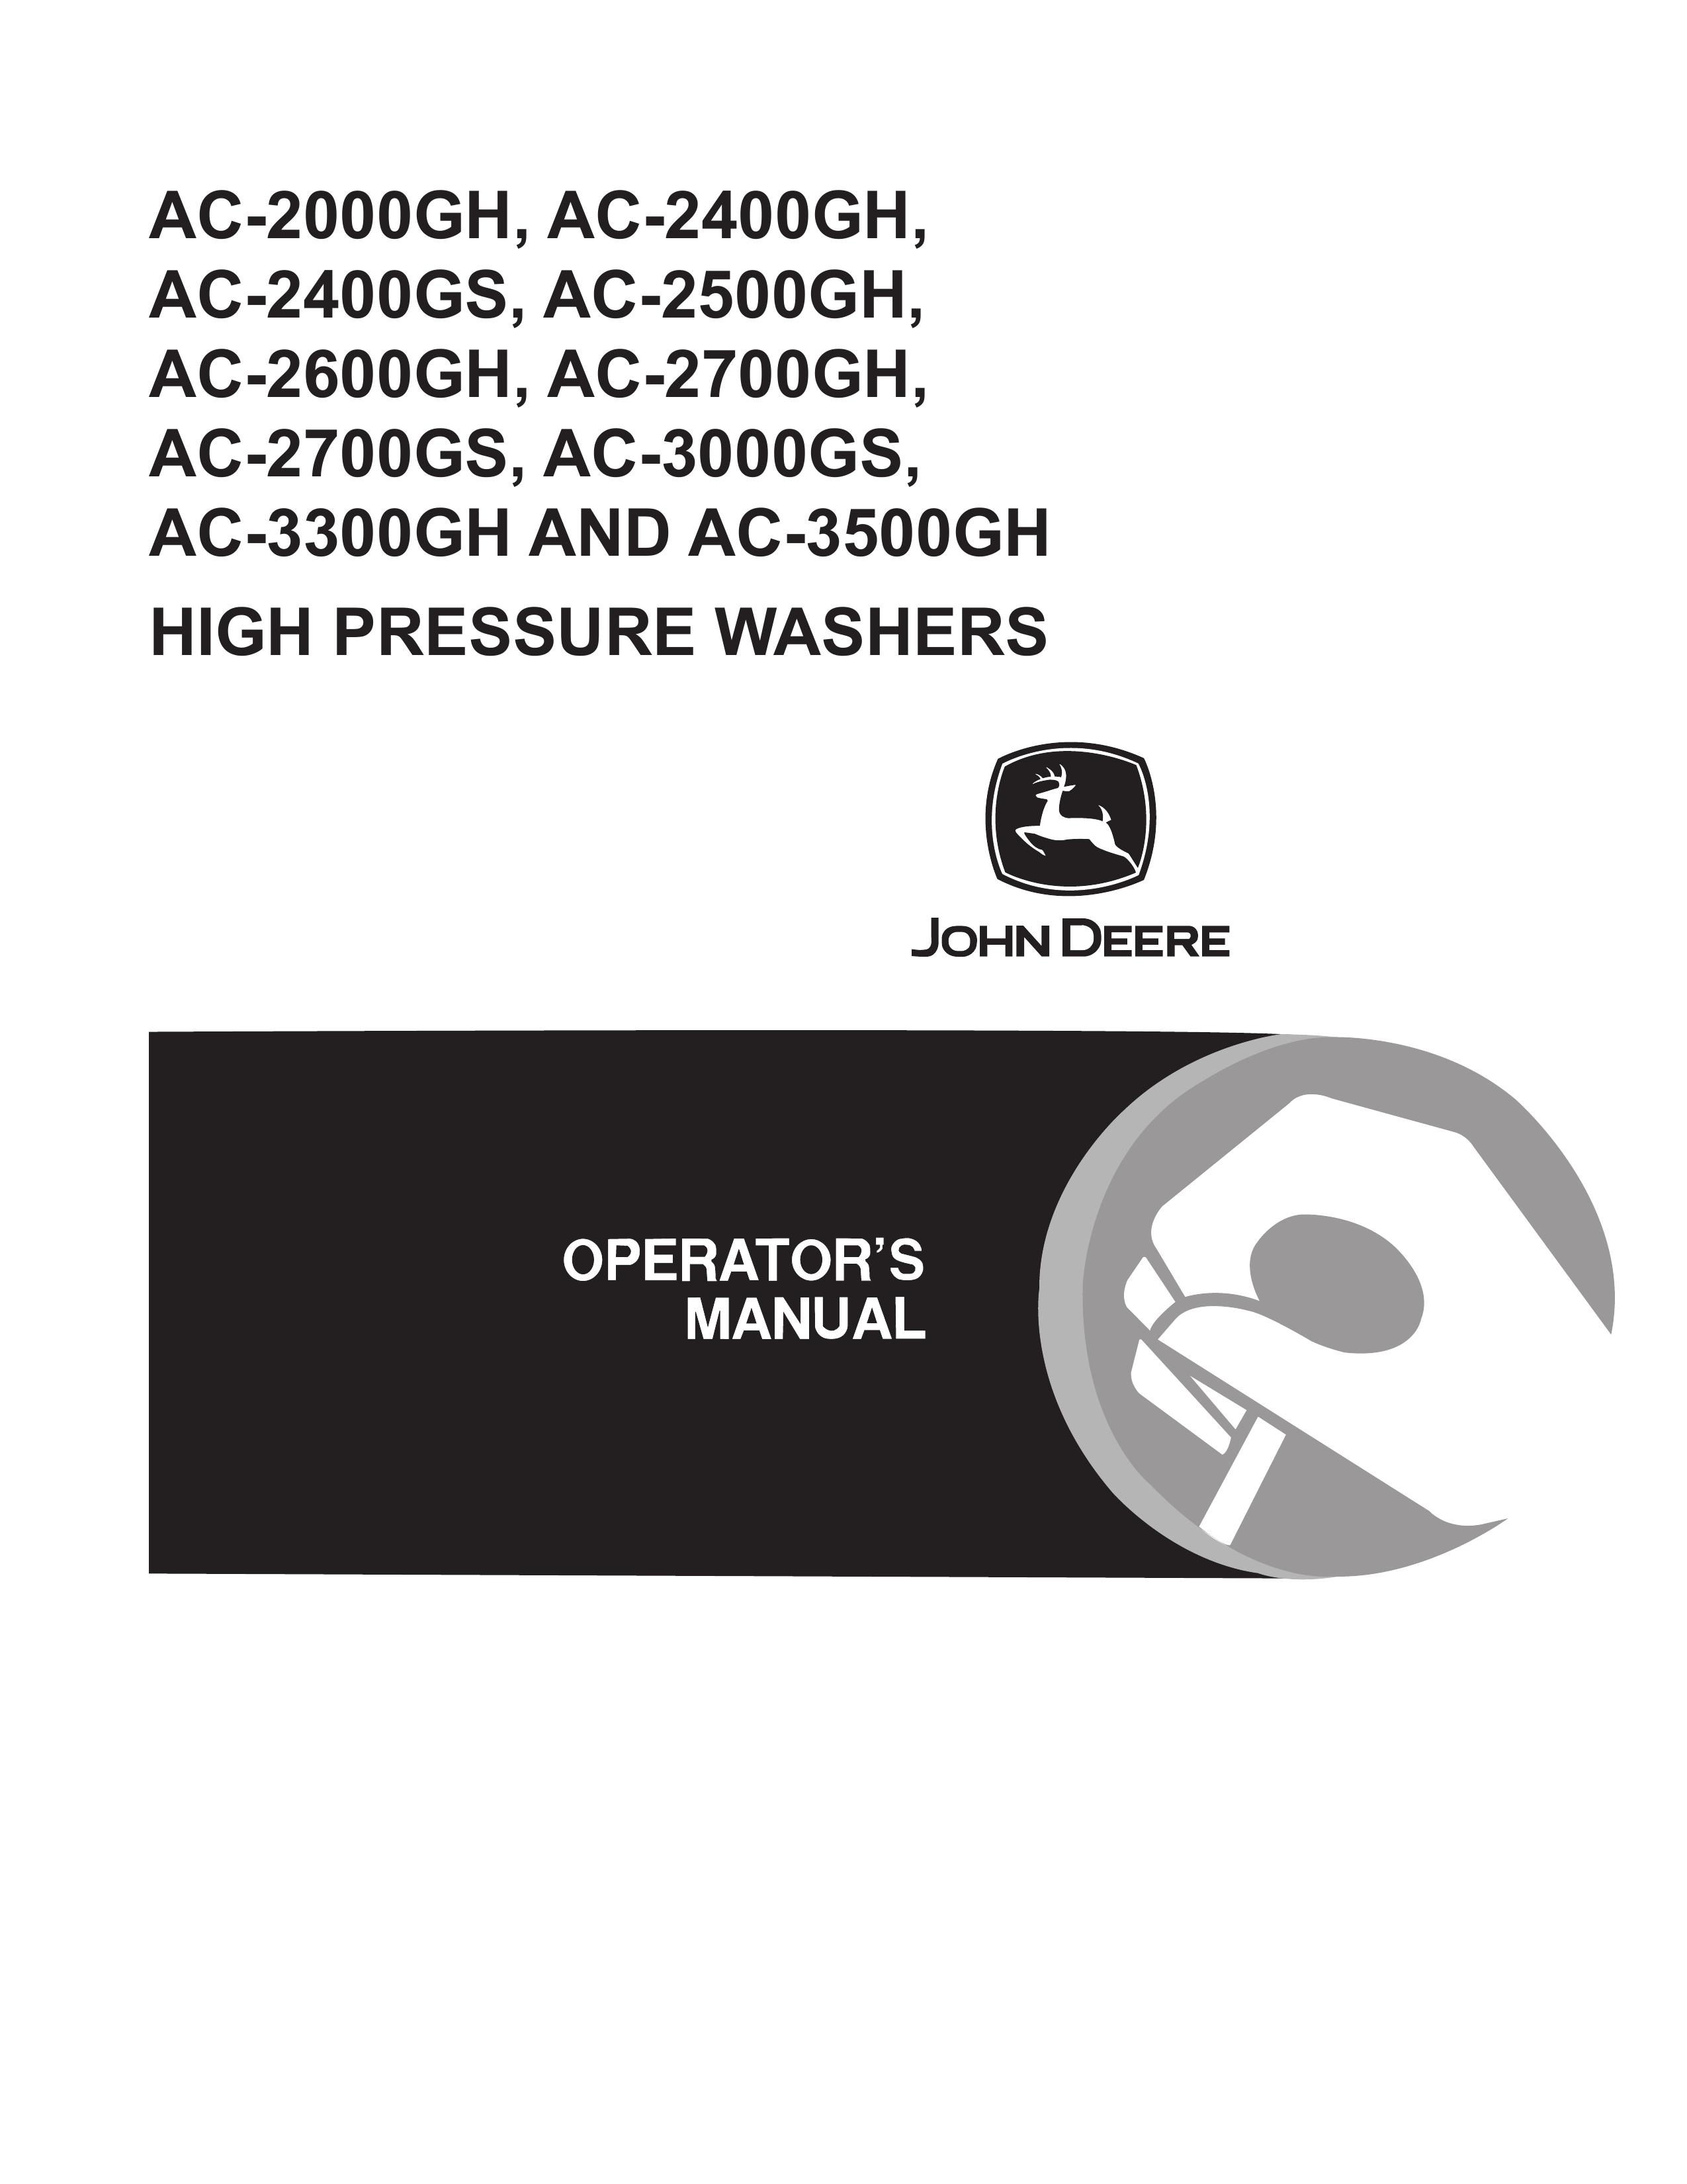 John Deere AC-2600GH Washer User Manual